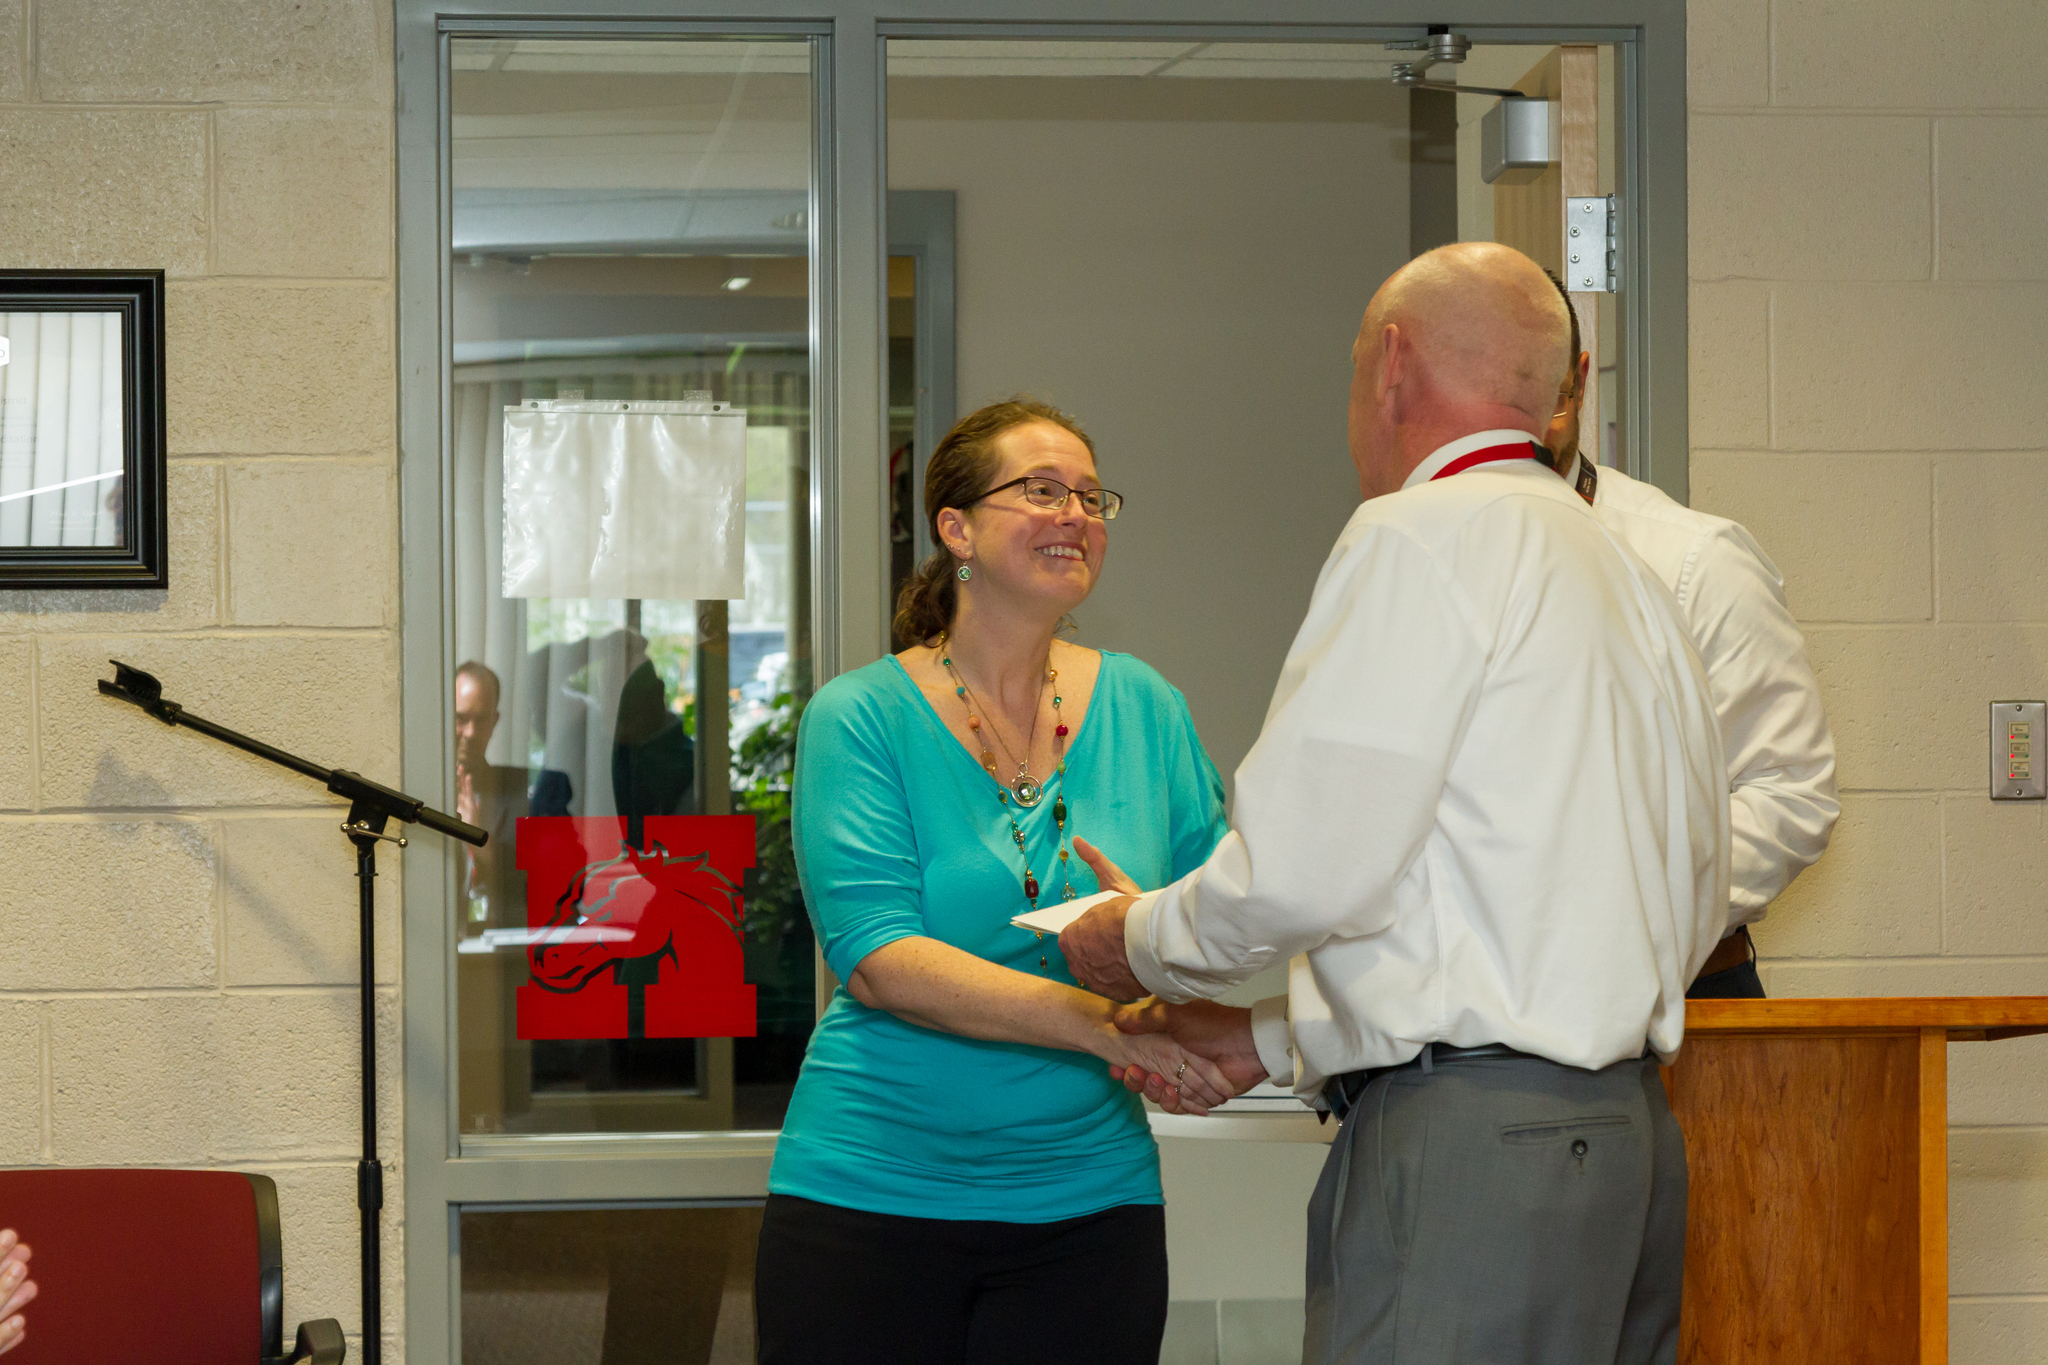 Ms. Jensen receiving her award from Mr. Curl